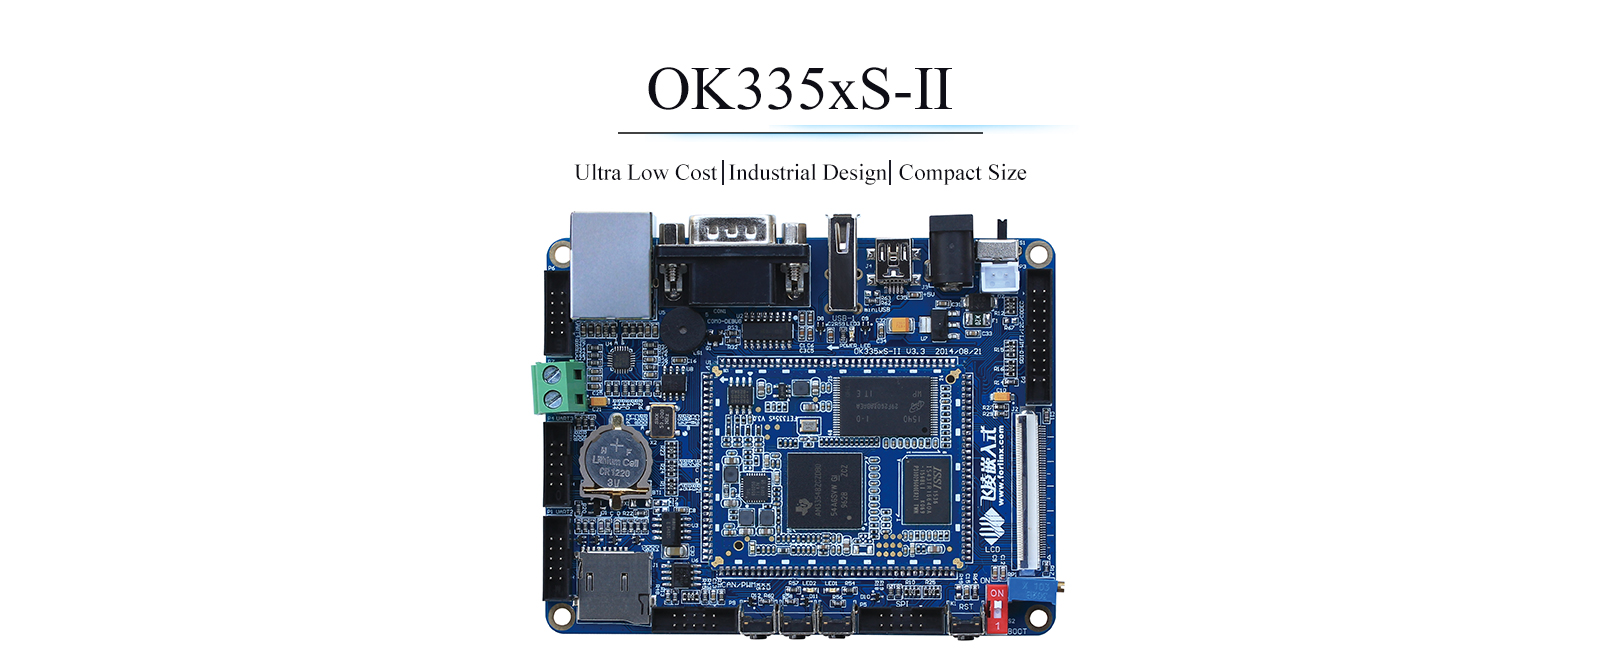 OK335xS-ll single board computer